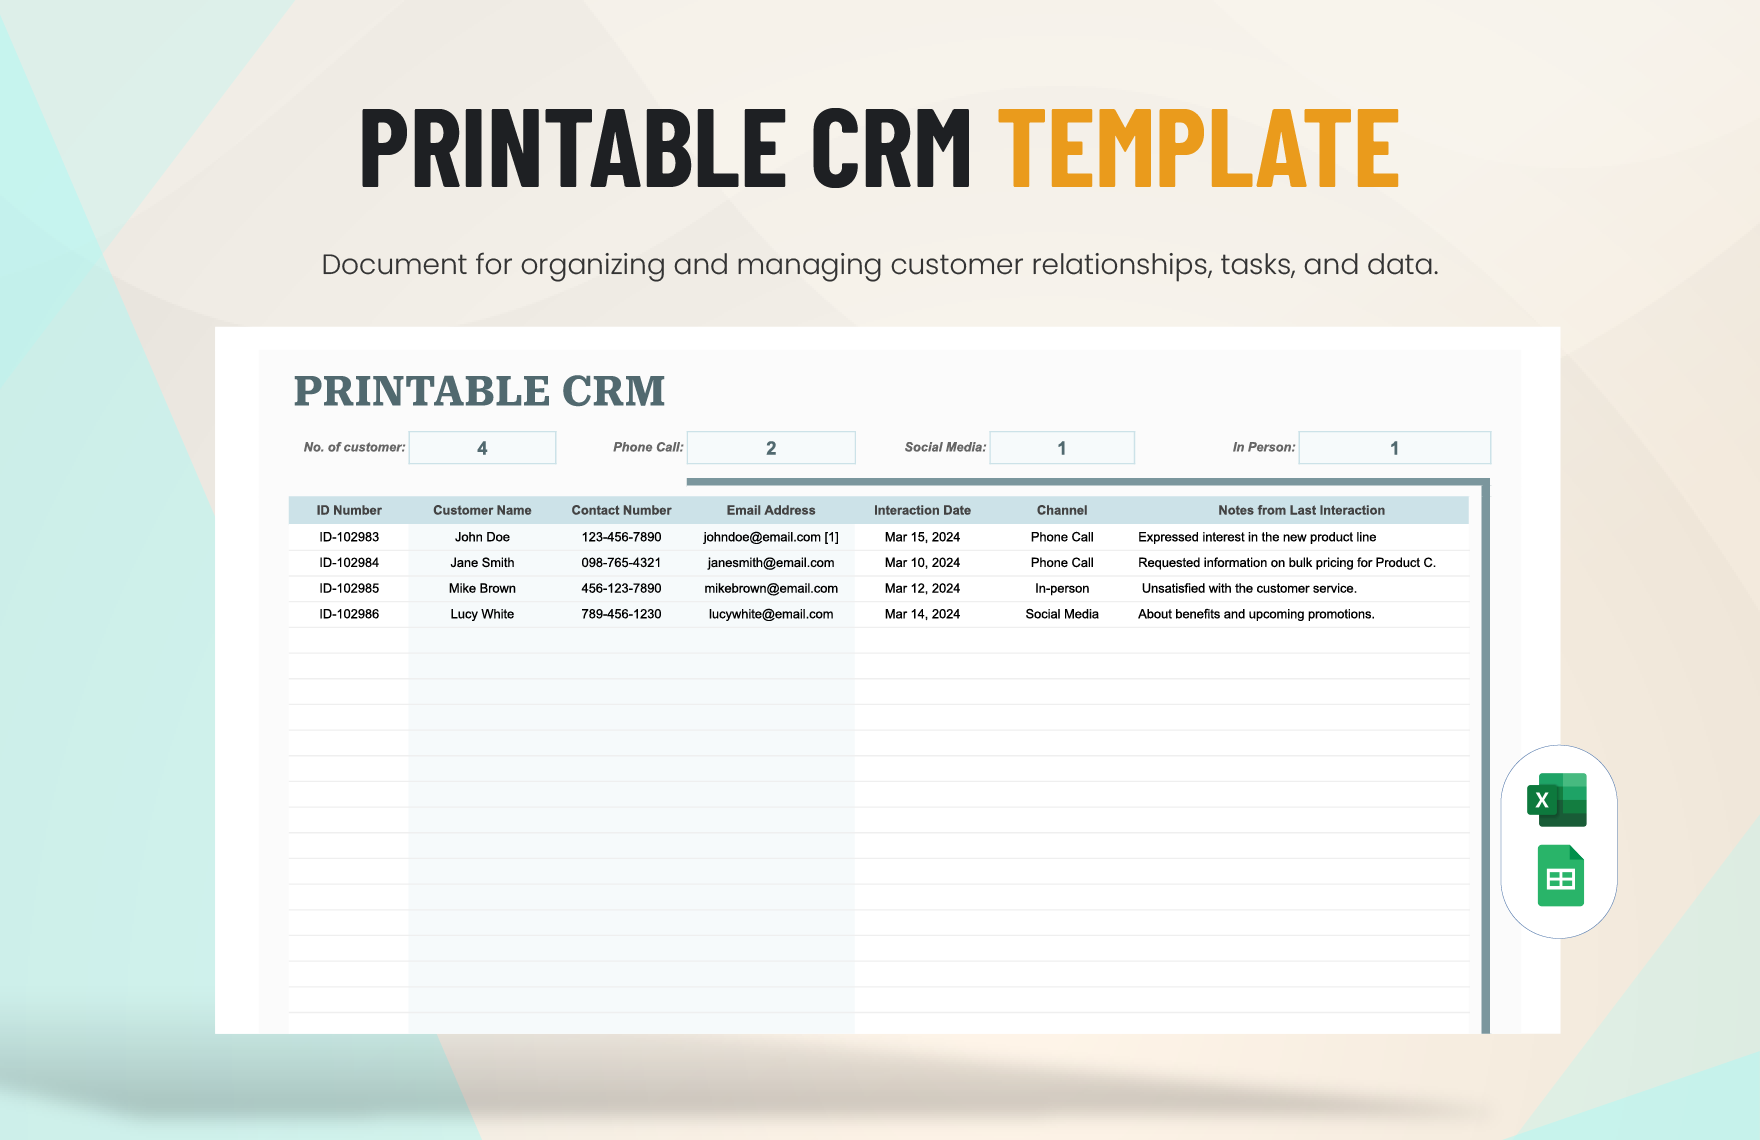 Printable CRM Template